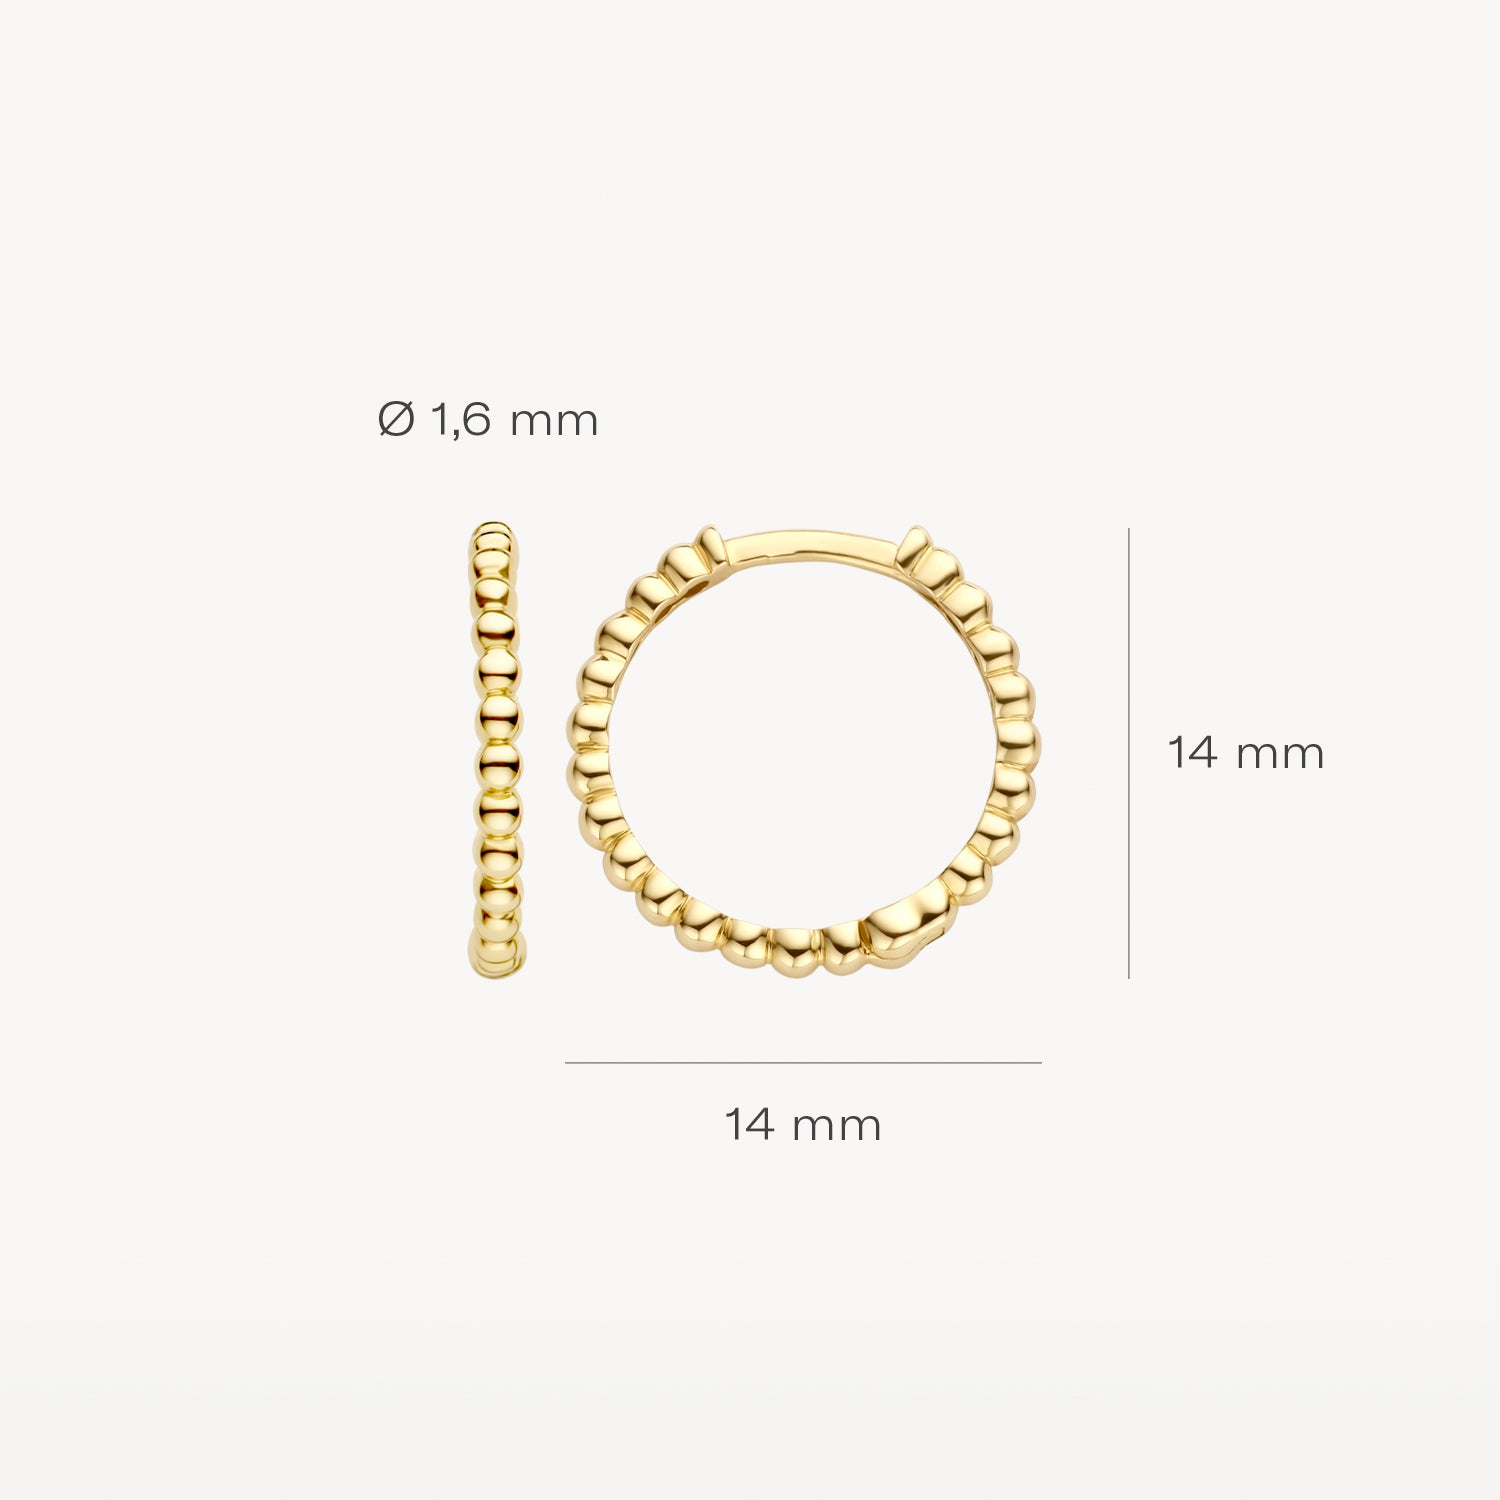 Earrings 7290YGO - 14k Yellow gold